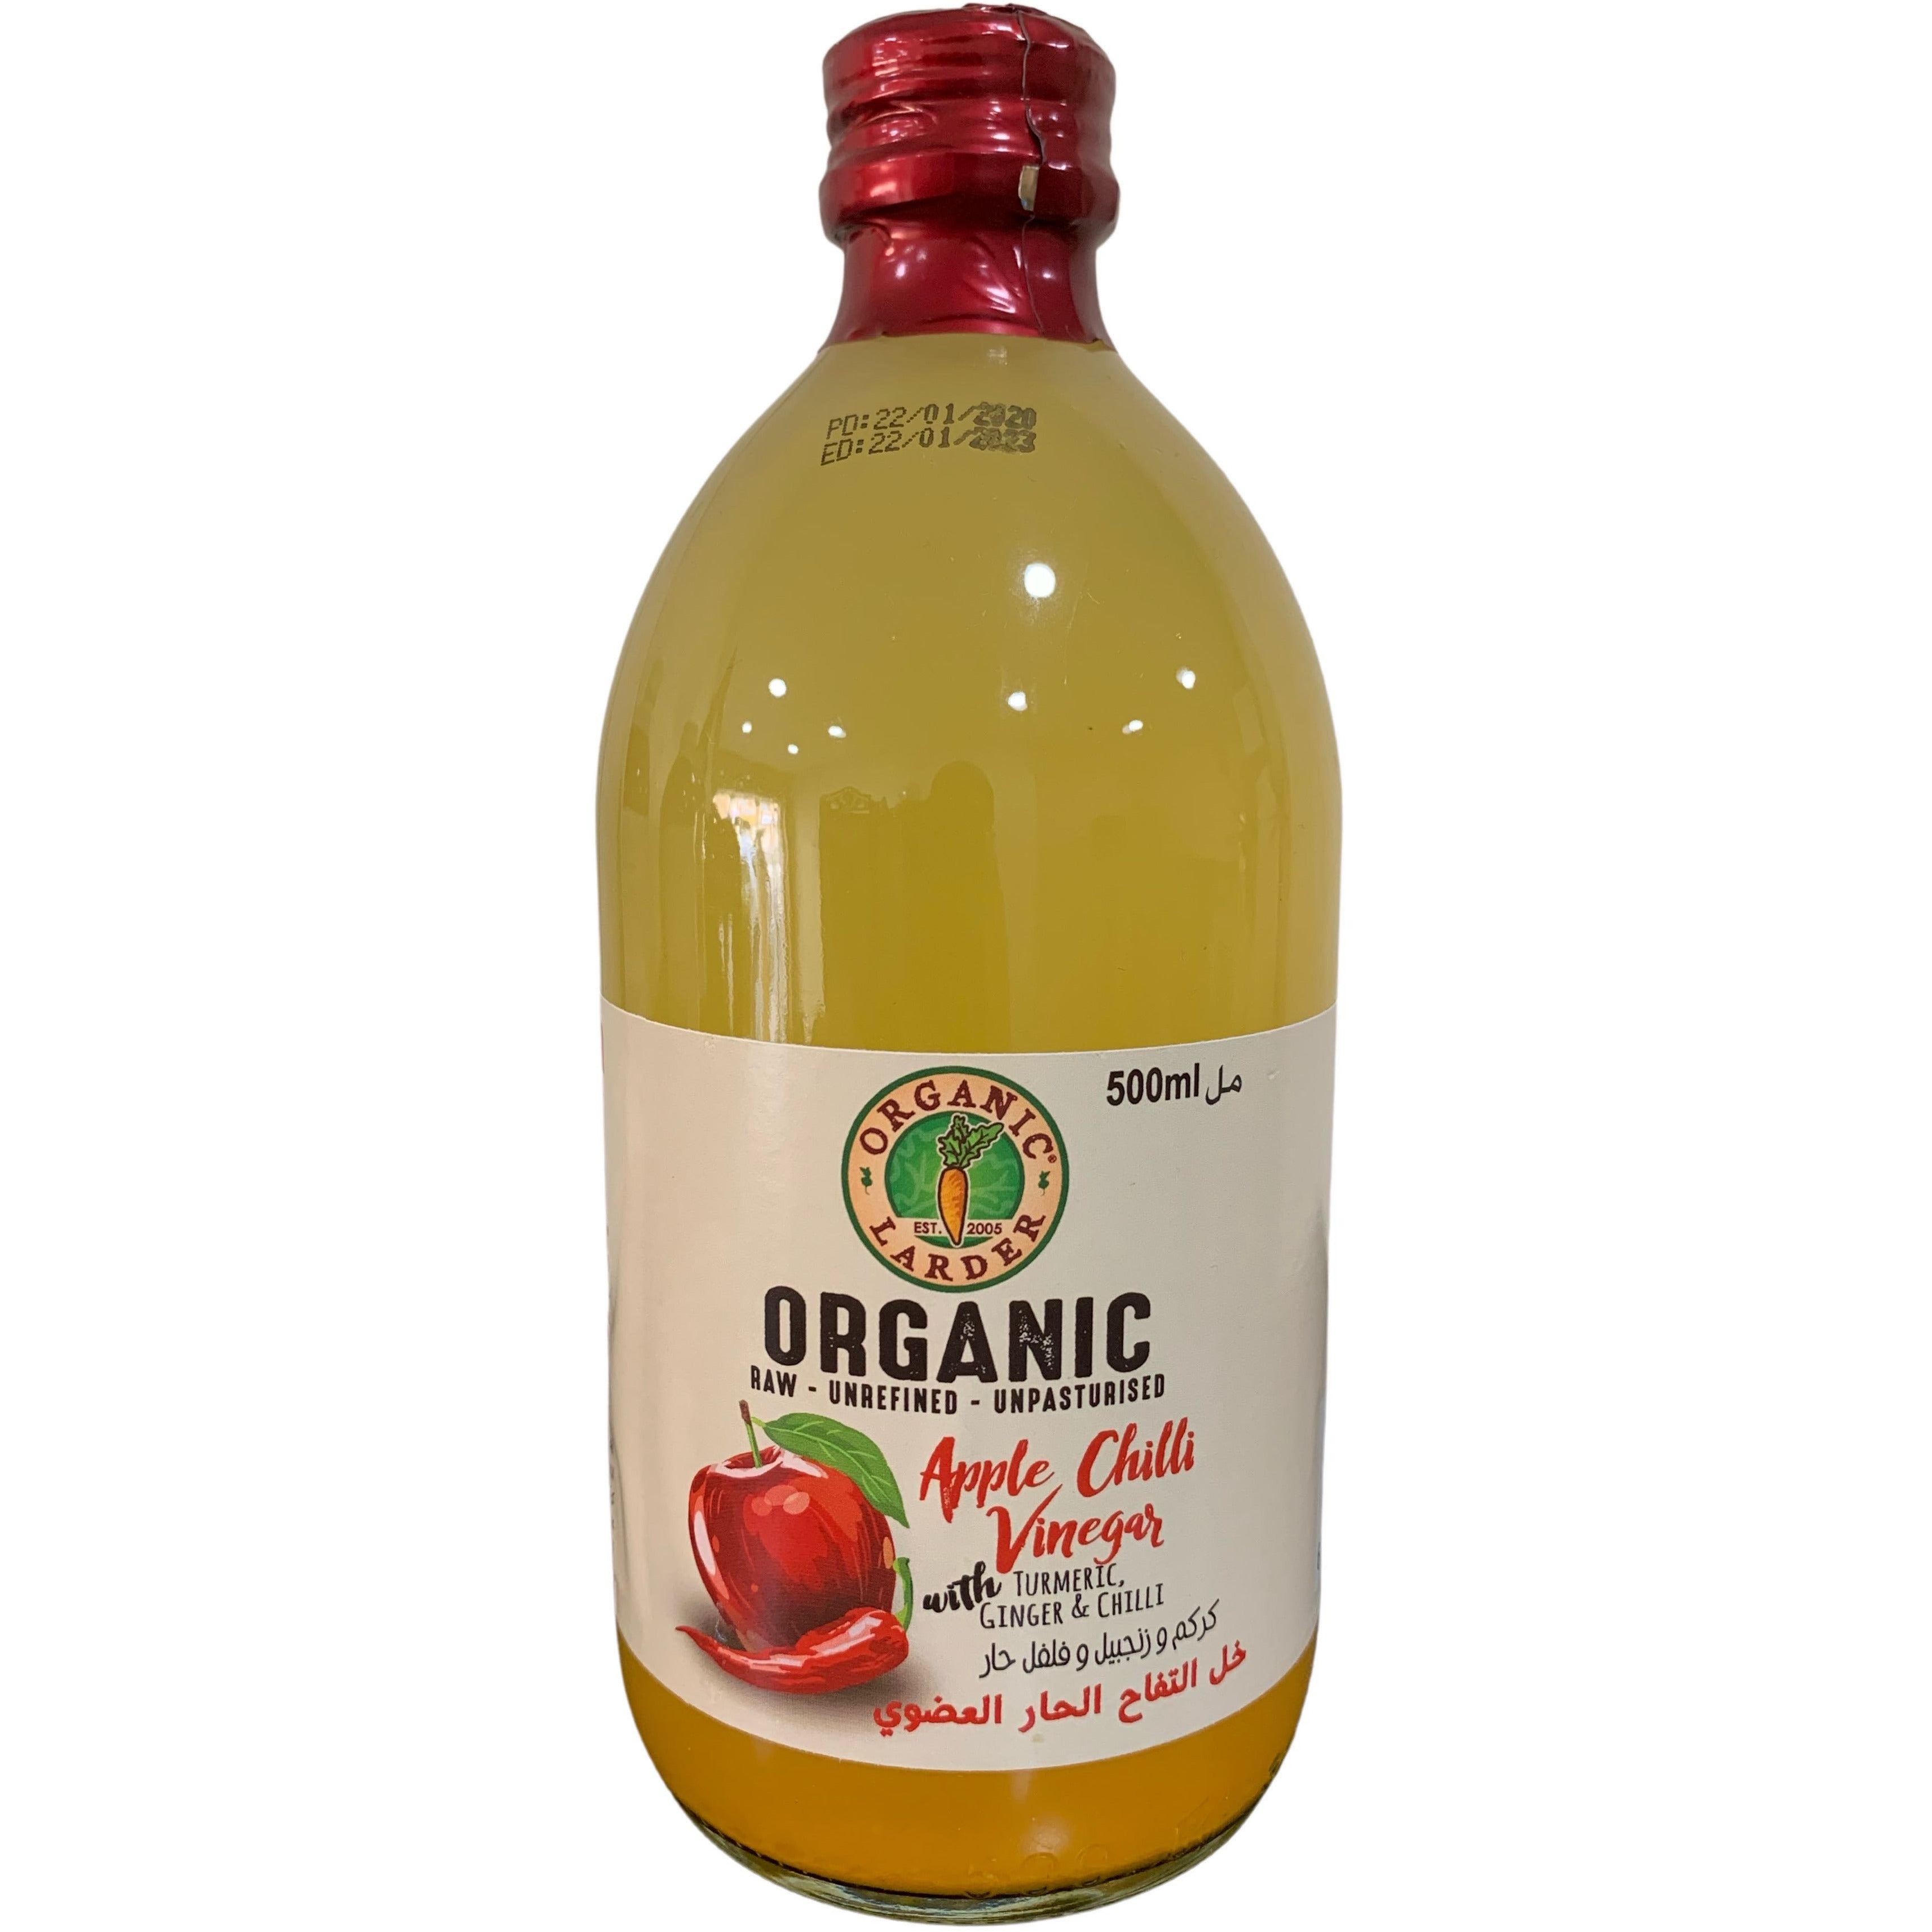 Organic Apple Chilli Vinegar.